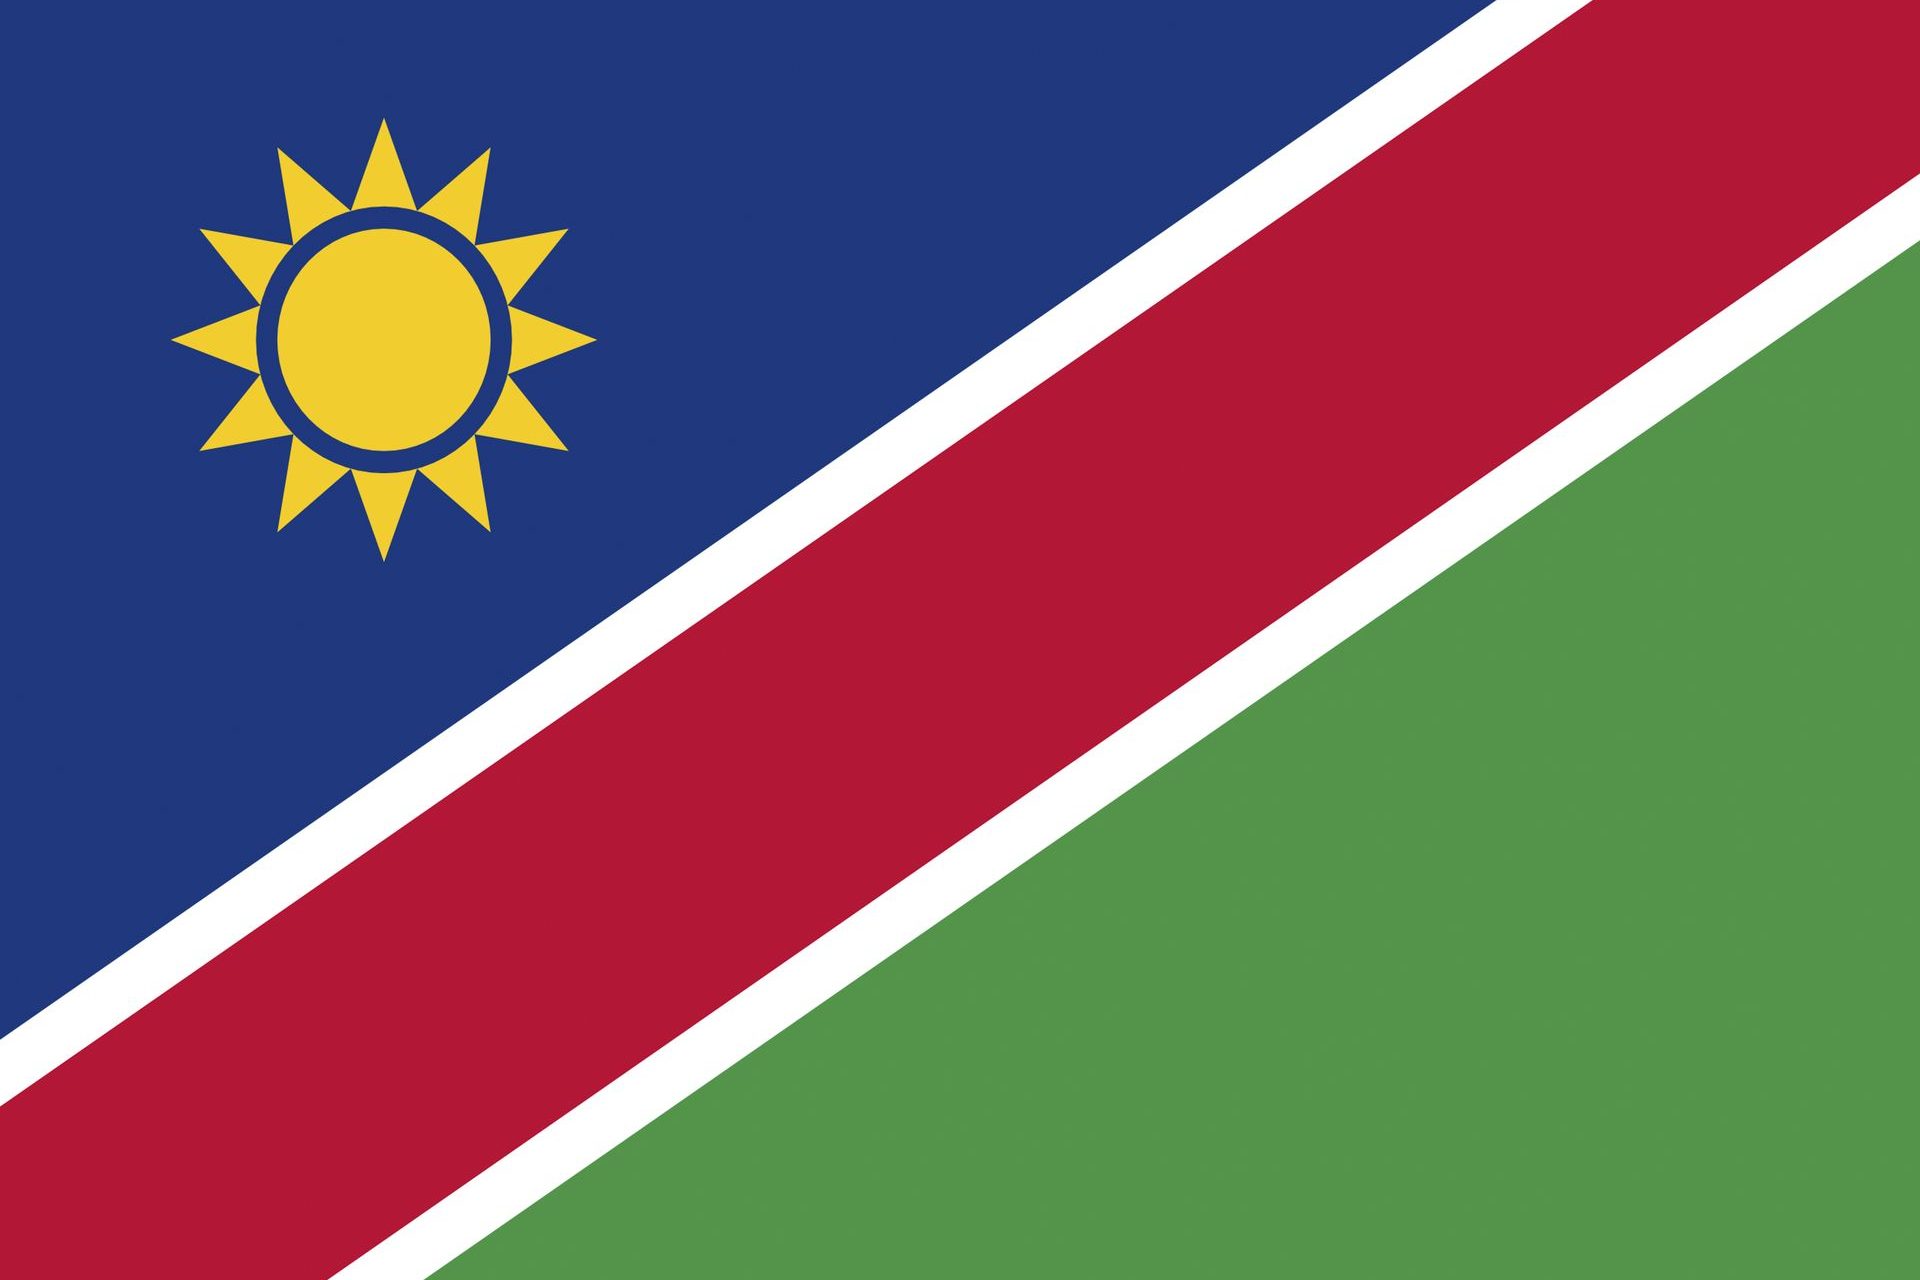 Namibia: 59.53 years